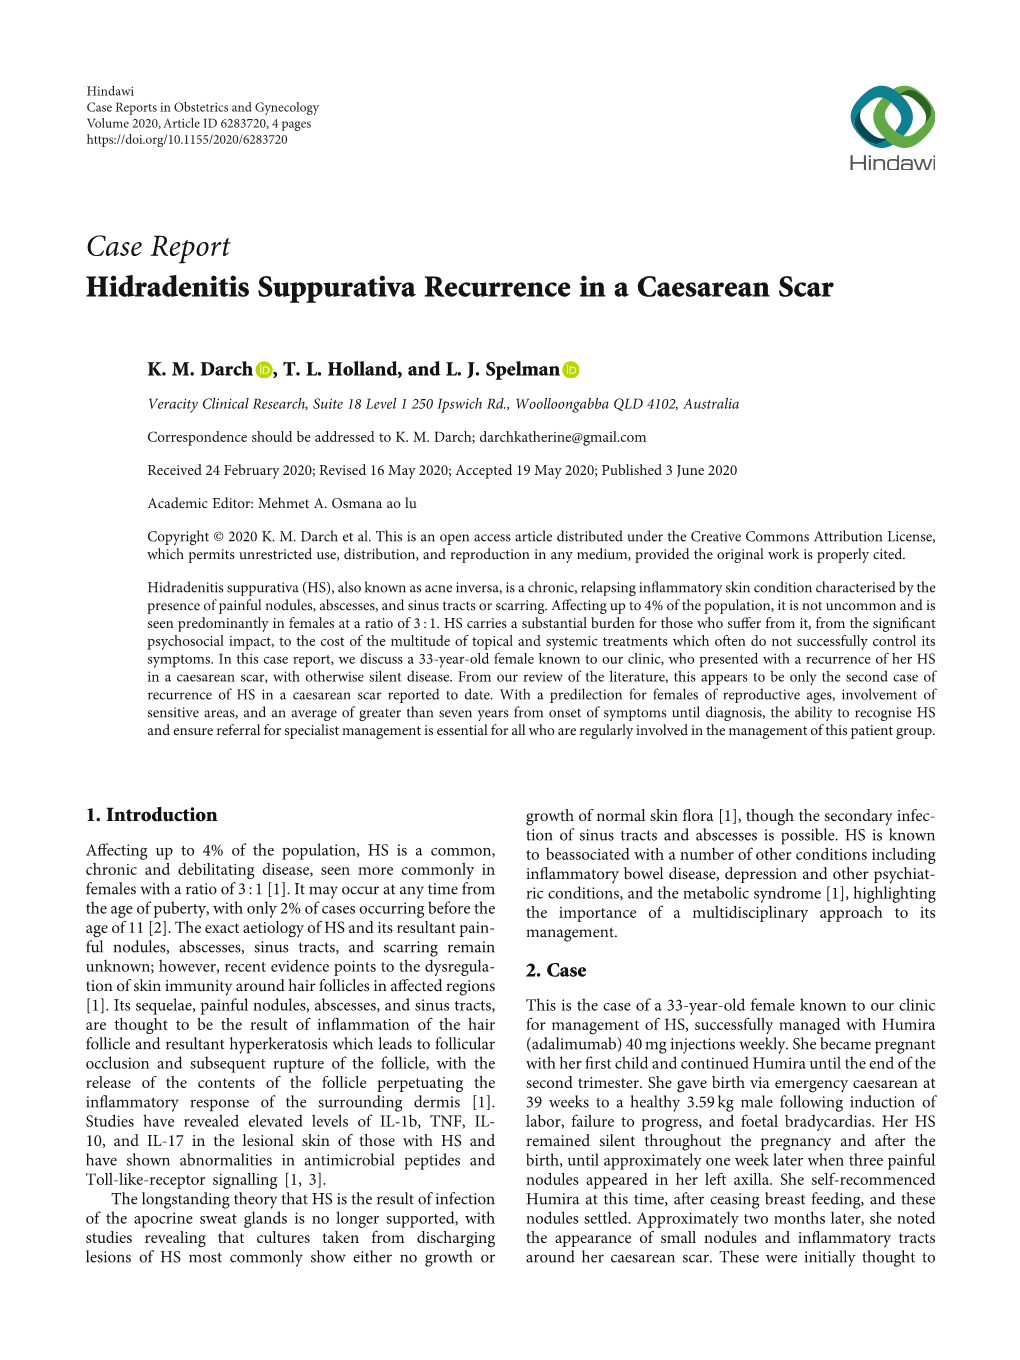 Case Report Hidradenitis Suppurativa Recurrence in a Caesarean Scar